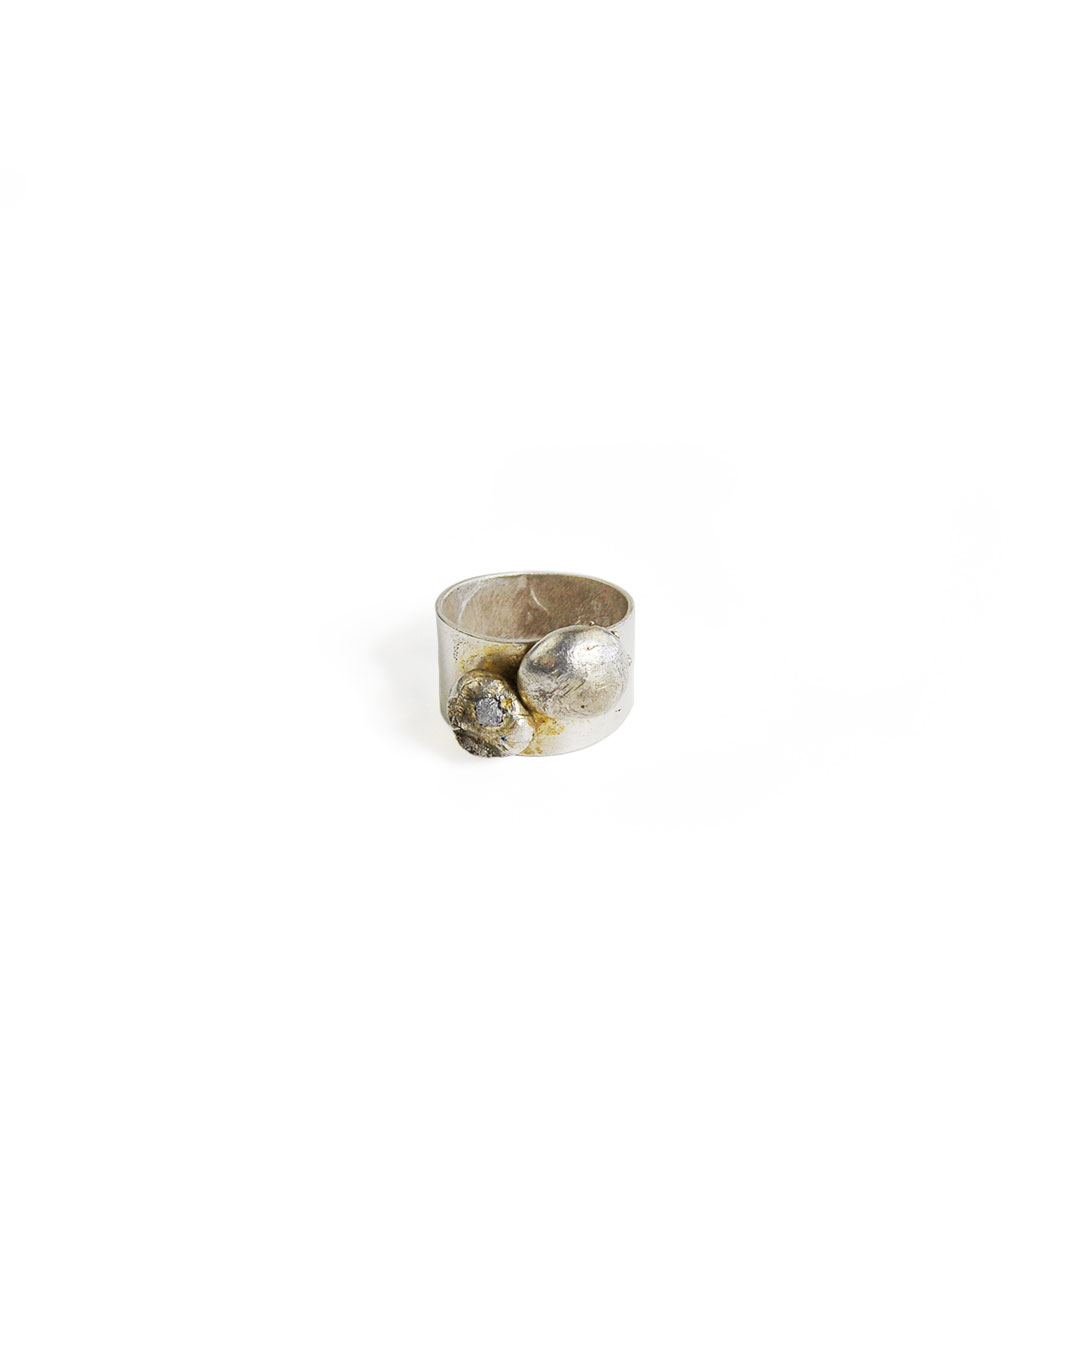 Rudolf Kocéa, untitled, 2014, ring; silver copper alloy, uncut diamonds, ø 19 x 12 mm, €680